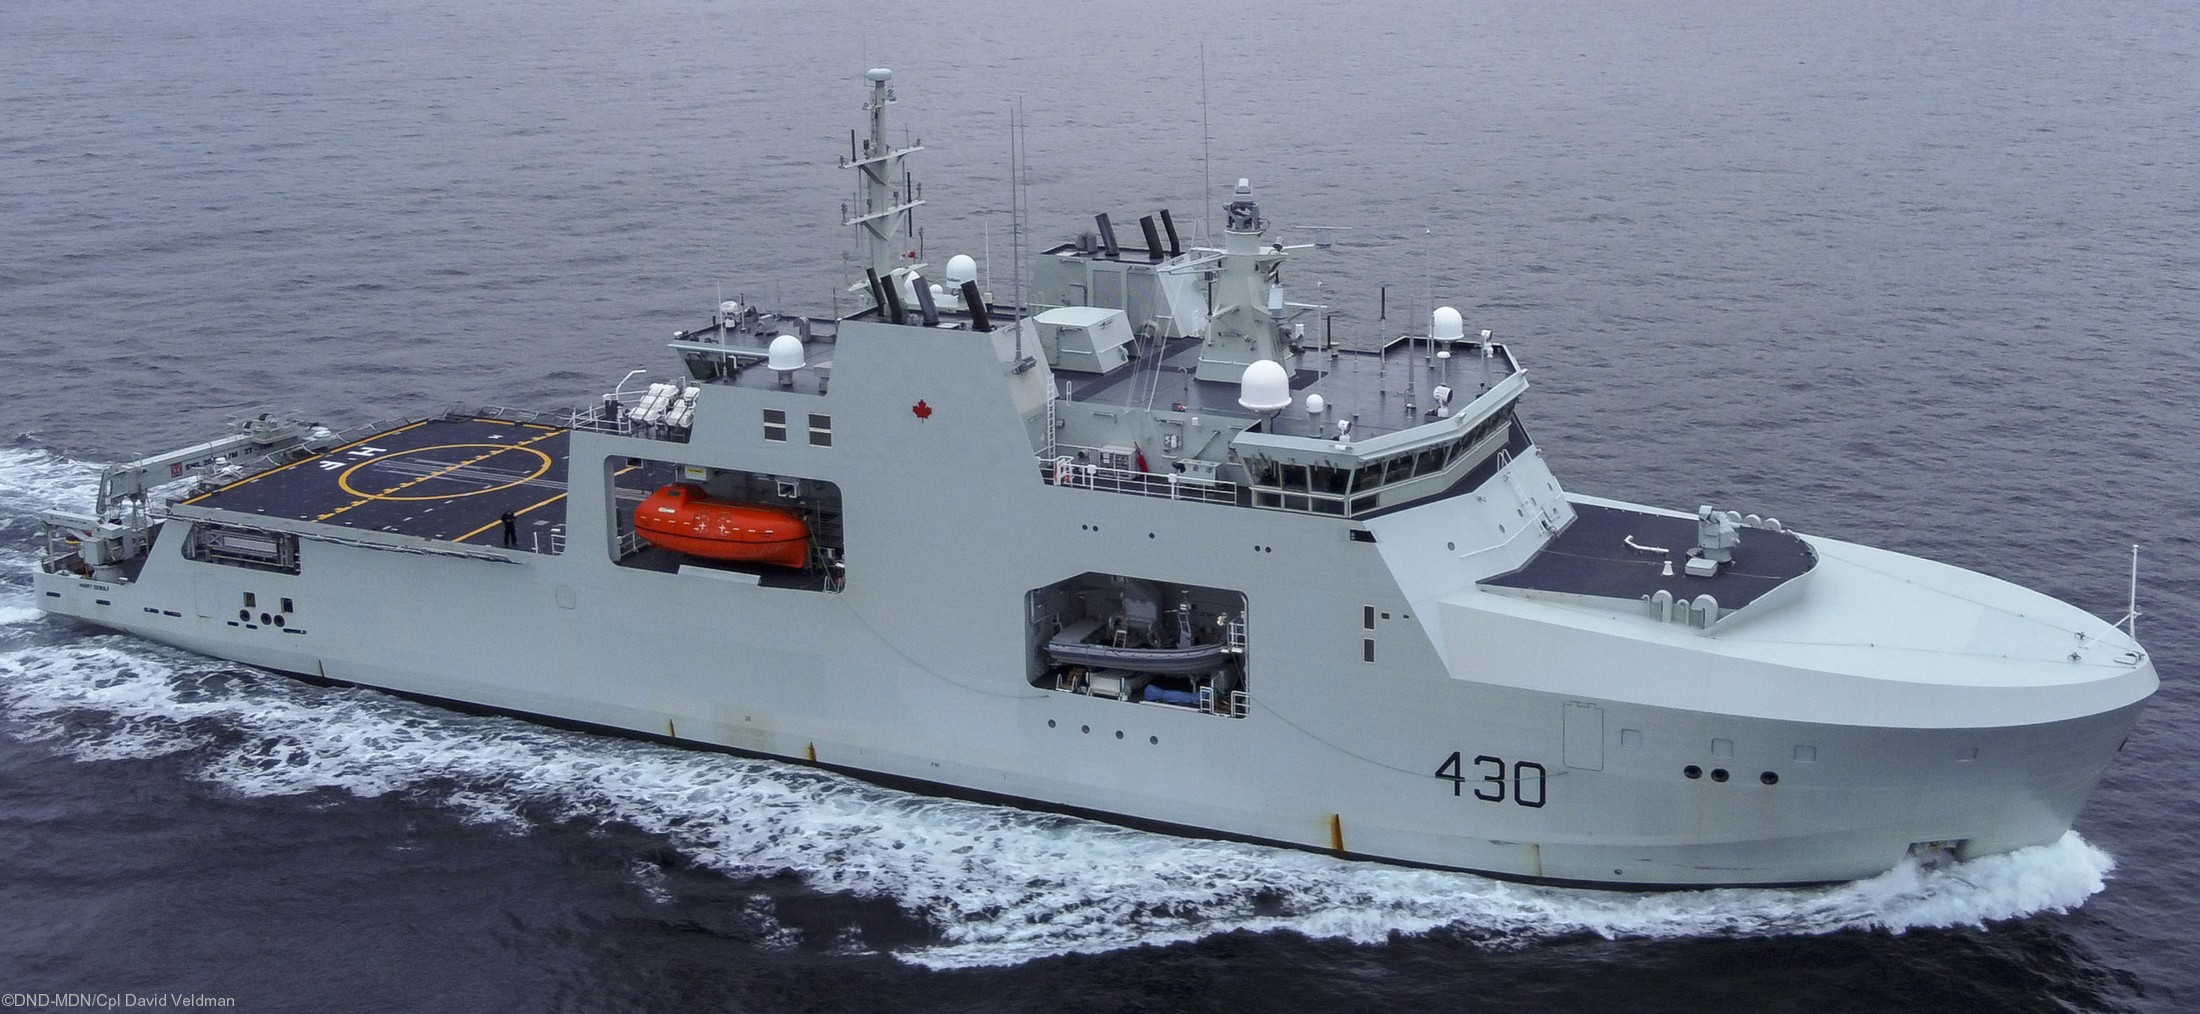 aopv-430 hmcs harry dewolf arctic offshore patrol vessel ncsm royal canadian navy 12